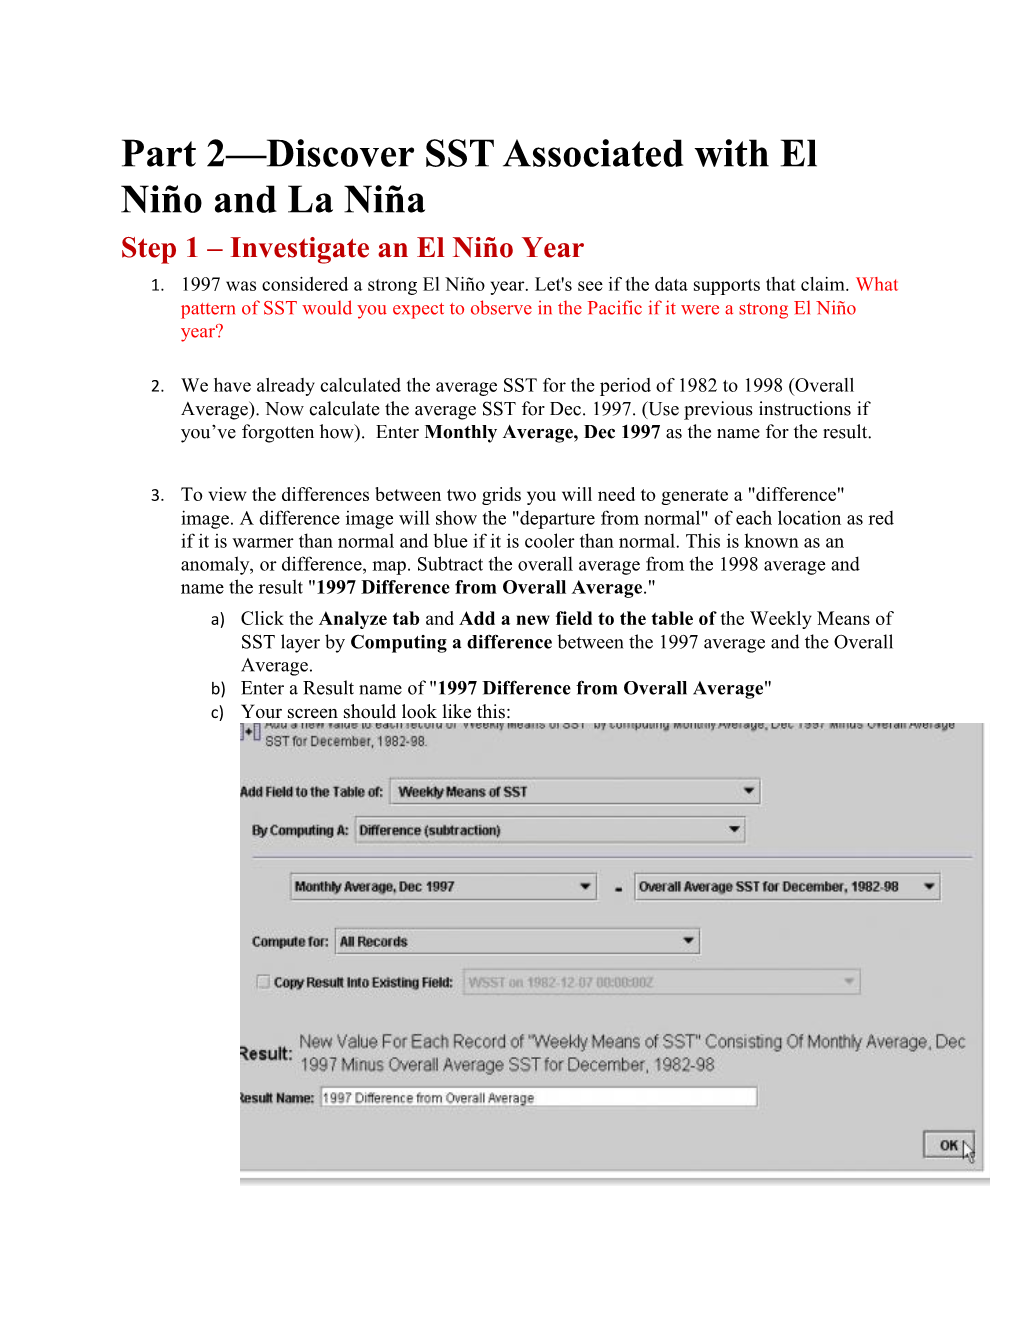 Part 2 Discover SST Associated with El Niño and La Niña